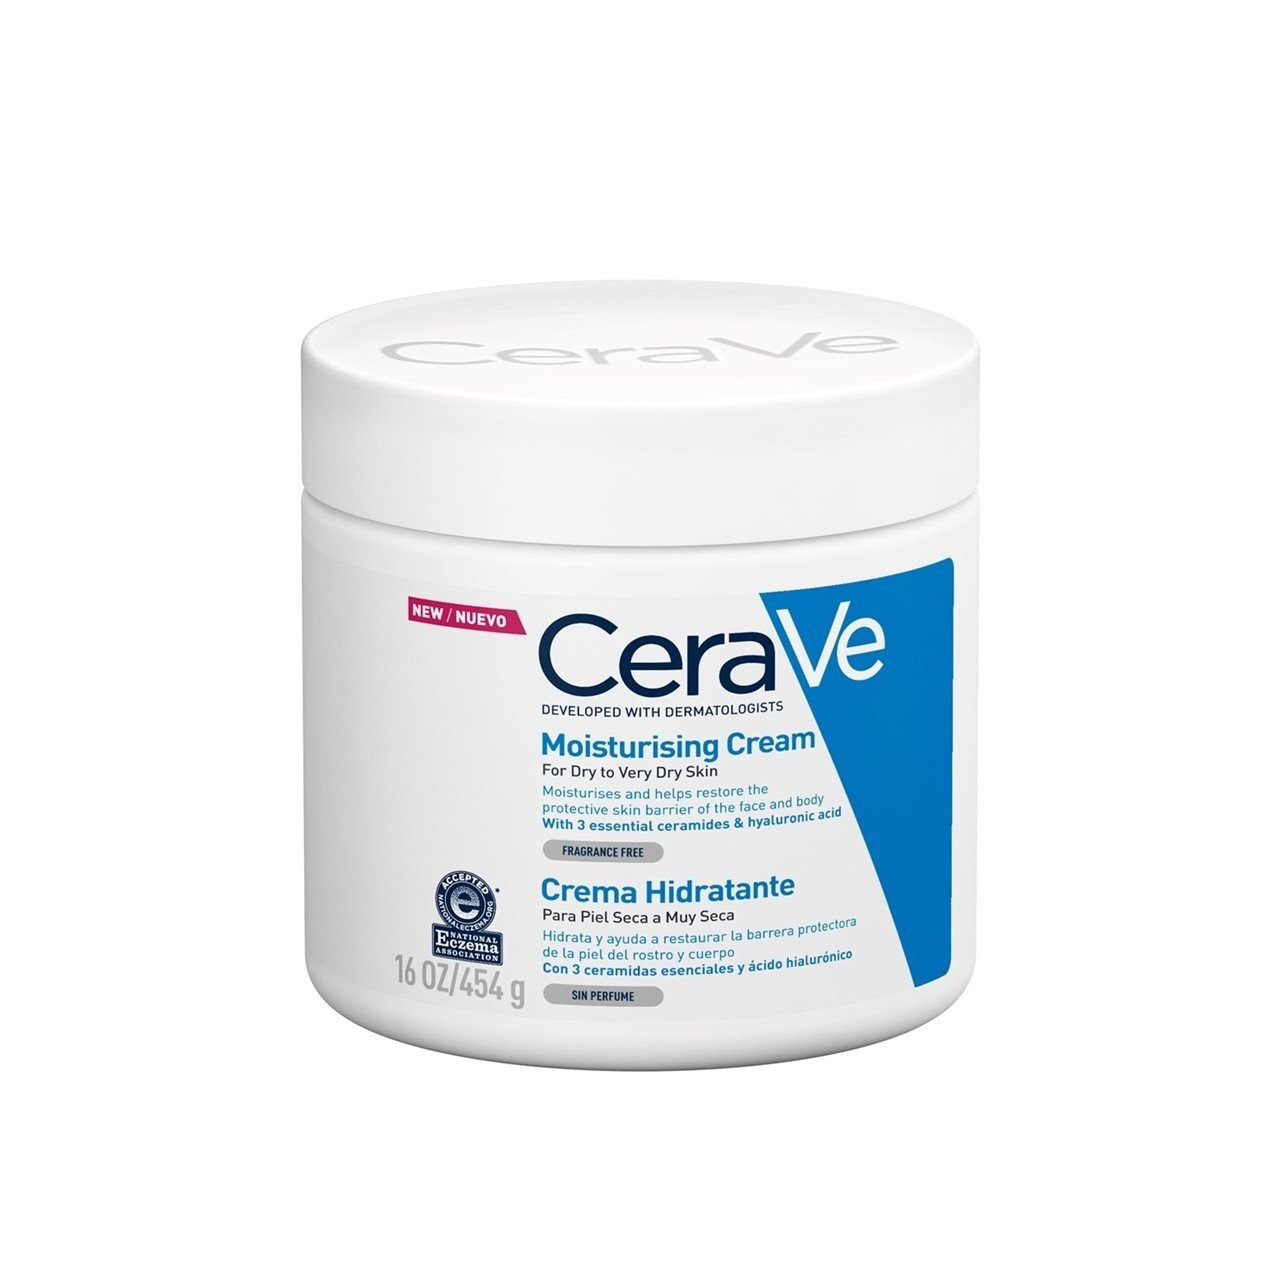 https://static.beautytocare.com/media/catalog/product/c/e/cerave-moisturizing-cream-dry-to-very-dry-skin.jpg